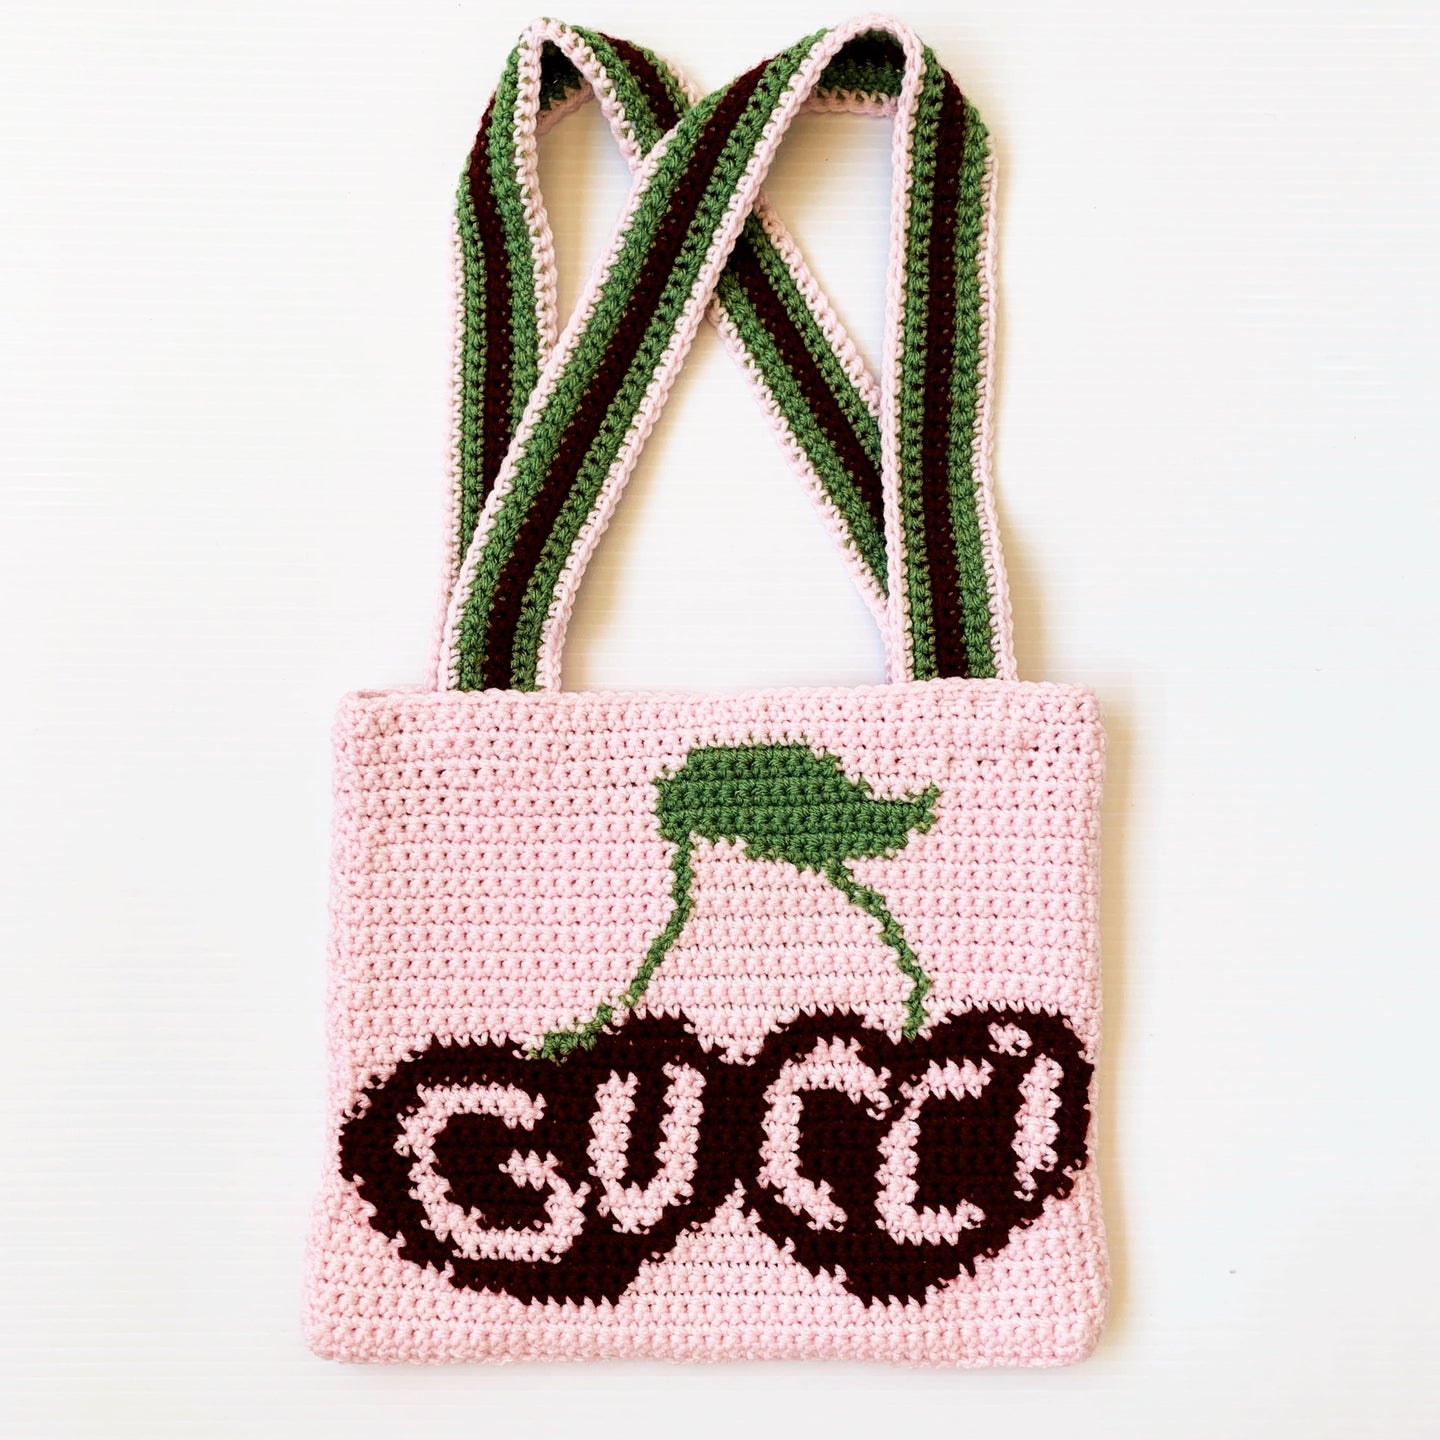 Bougie Cherry Tote Bag by Carolannie Crochet